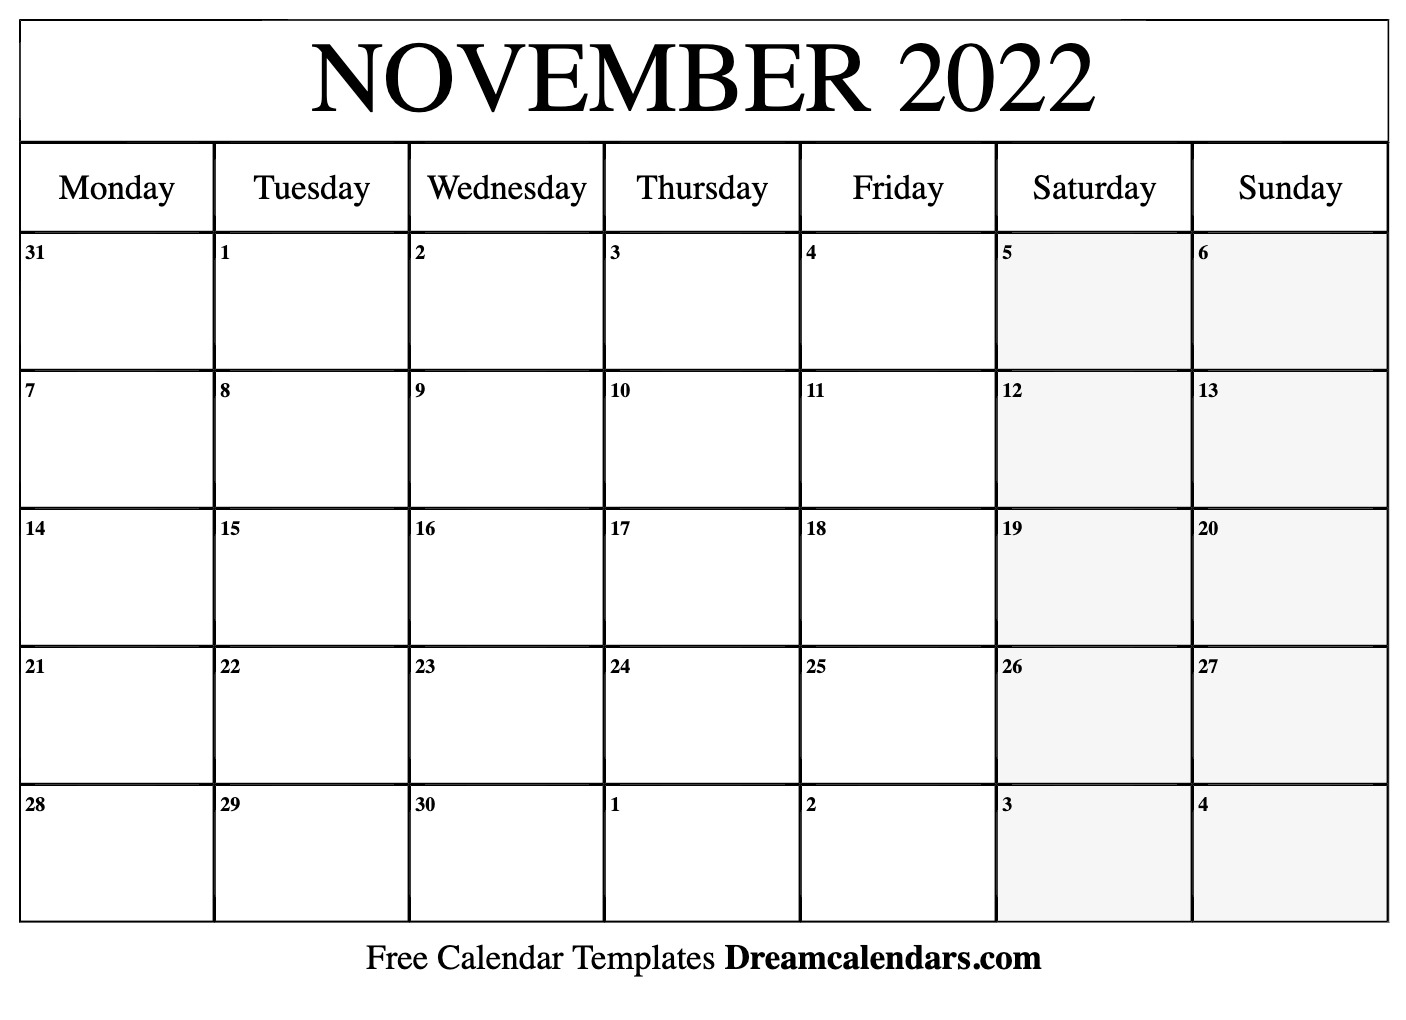 November 2022 Free Printable Calendar Download Printable November 2022 Calendars